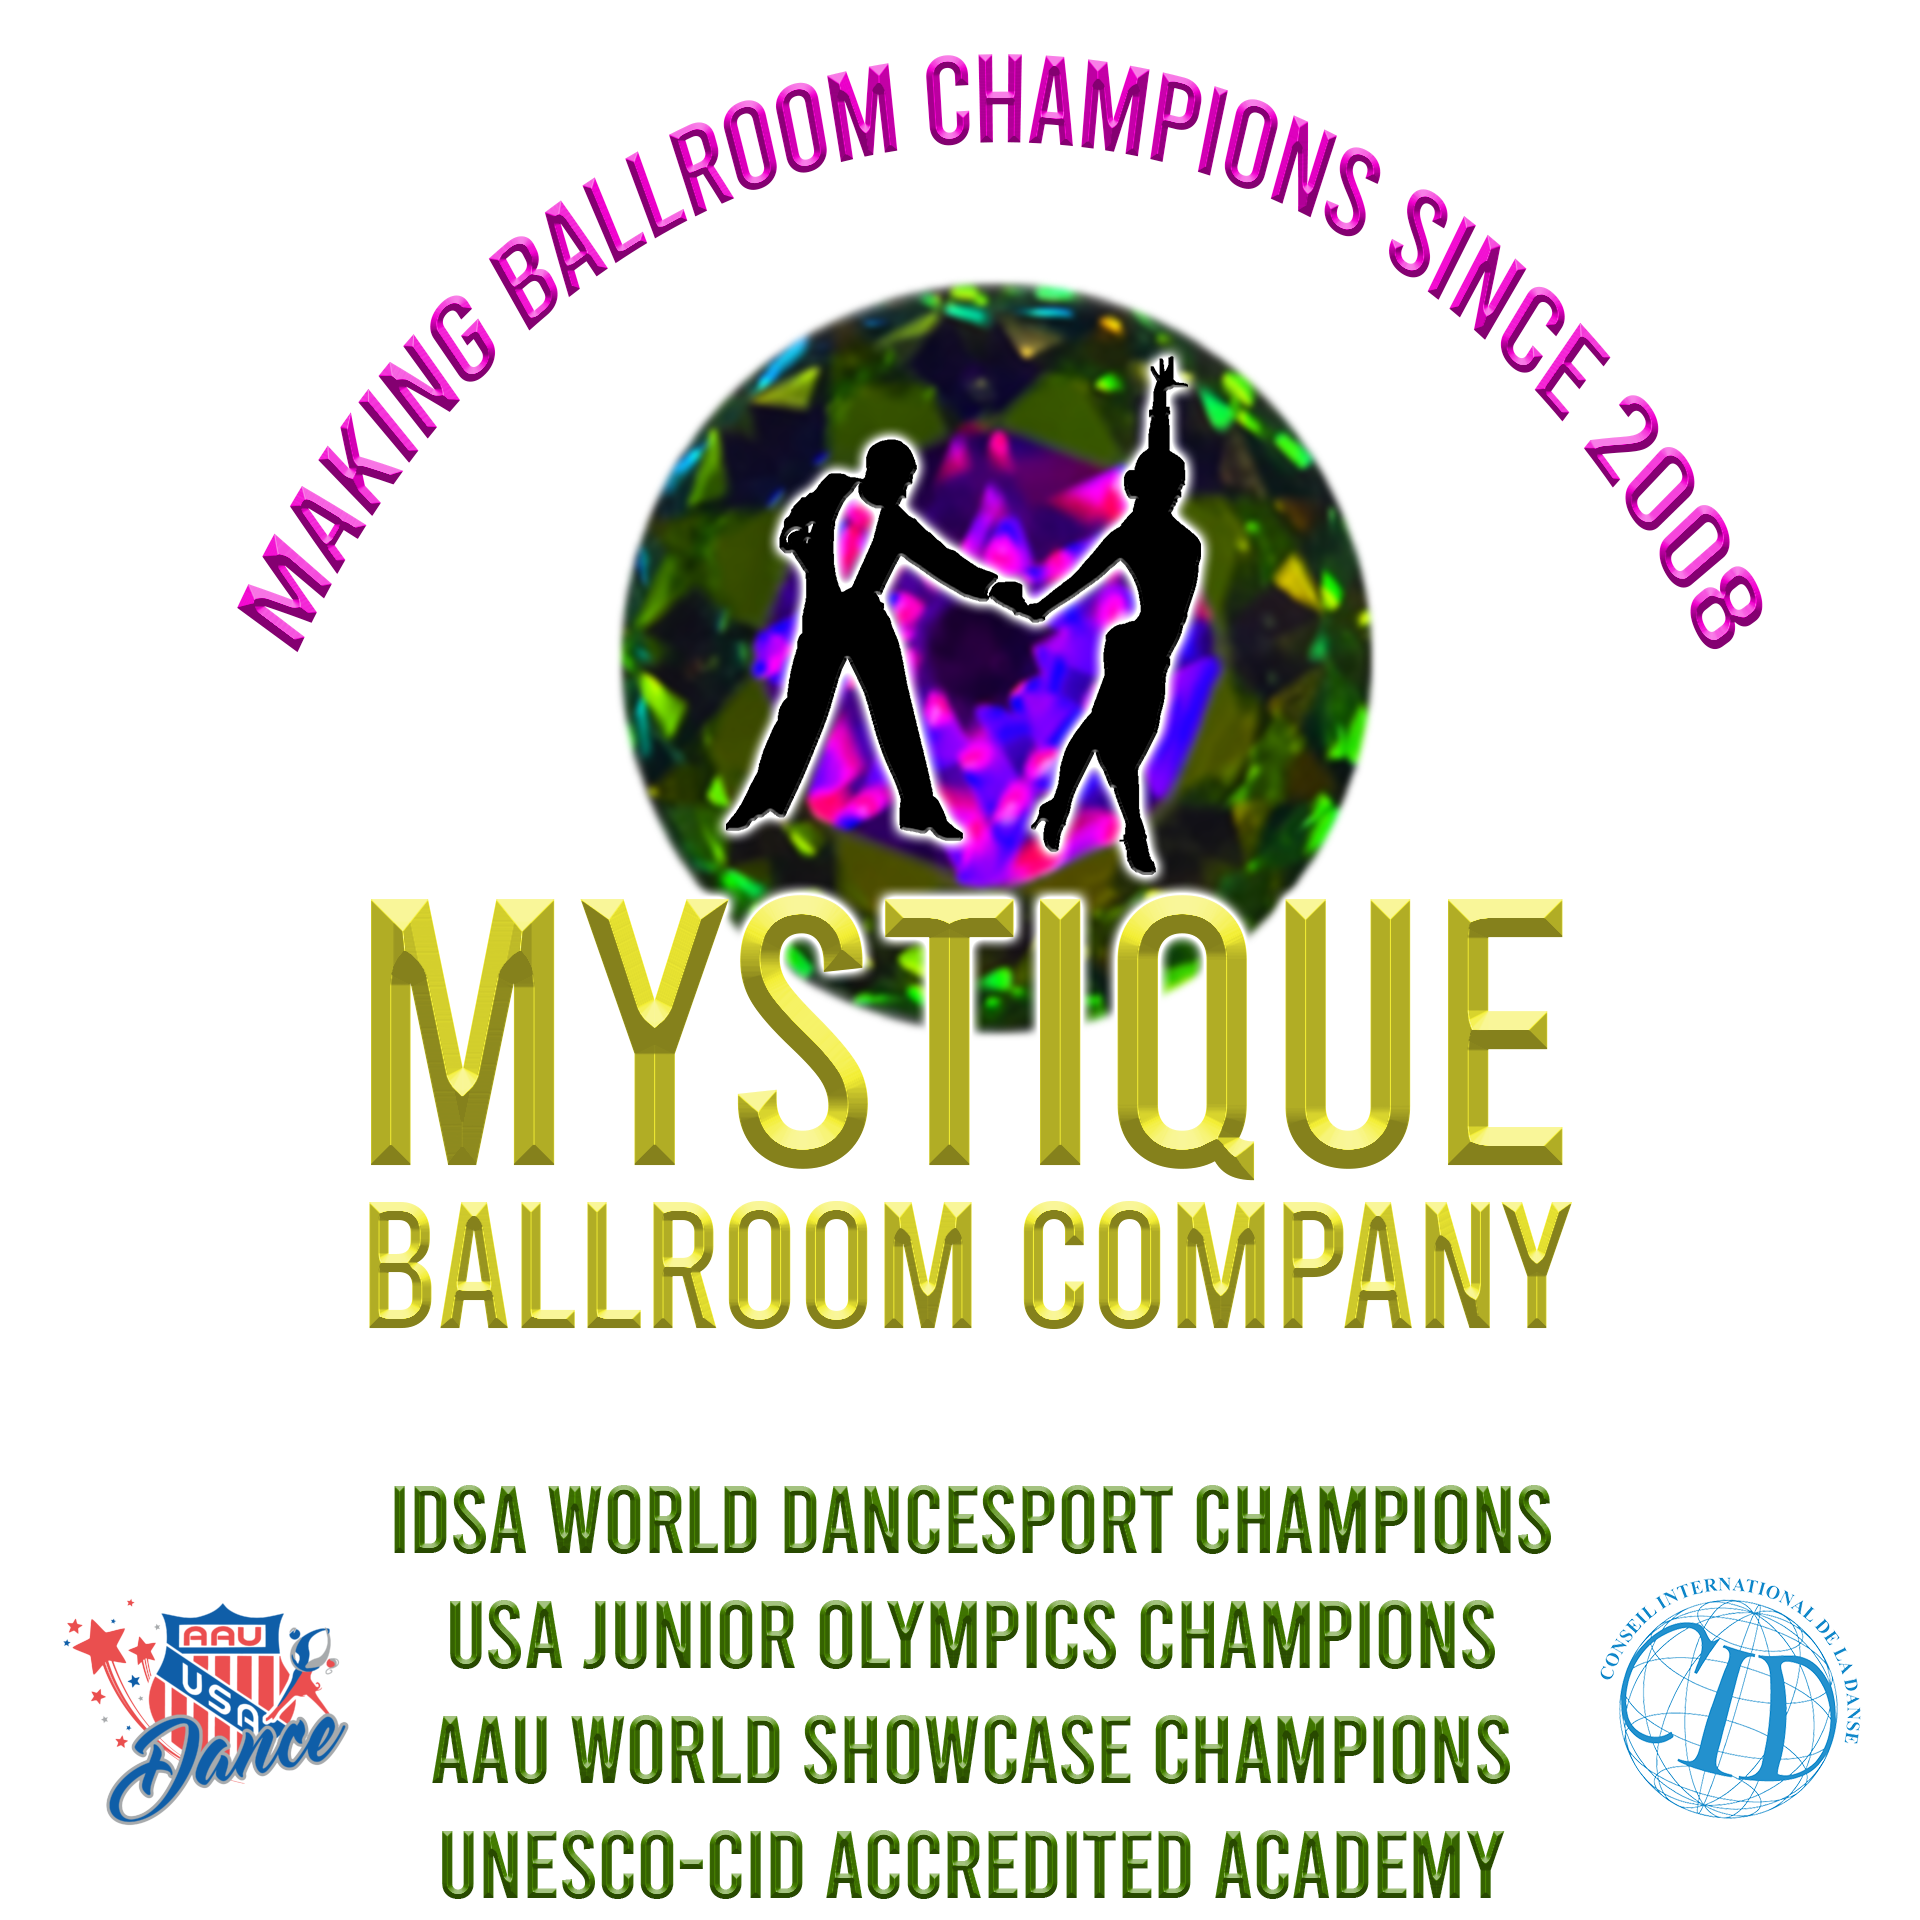 Mystique Ballroom Company